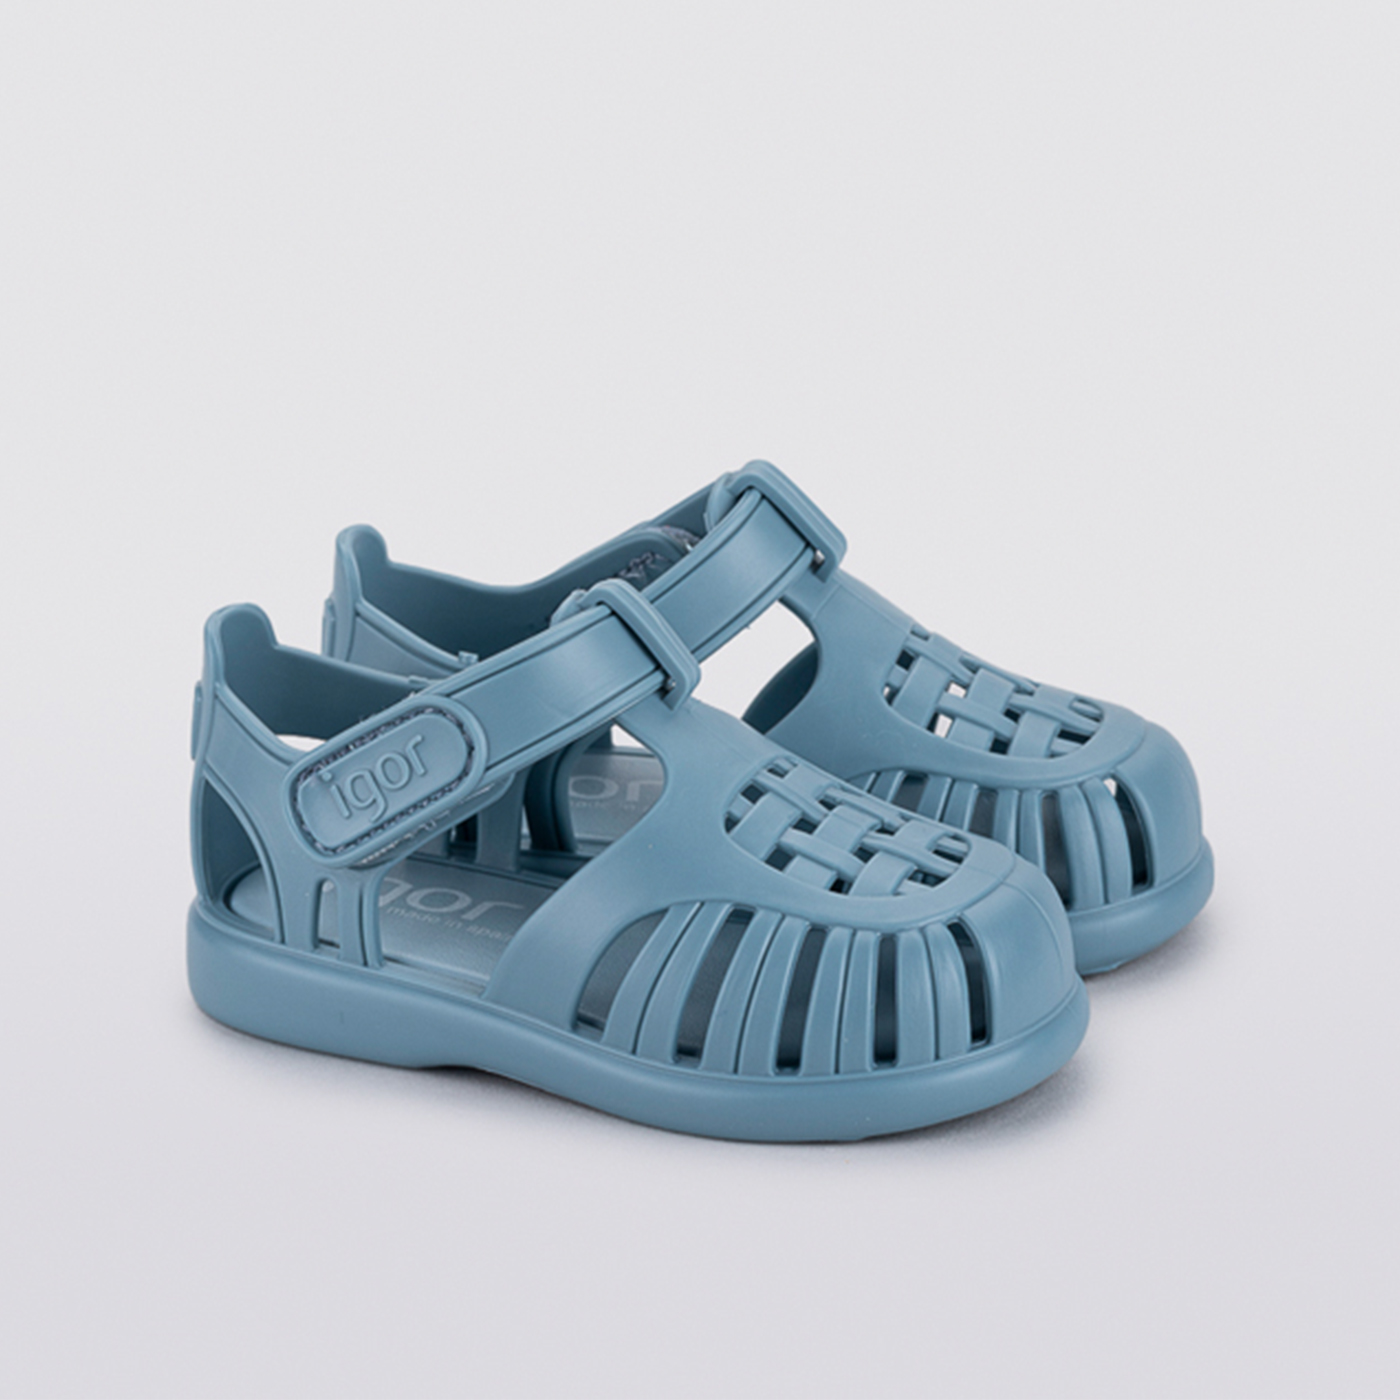  Igor S10271 Tobby Solid Çocuk Sandalet | Oceano